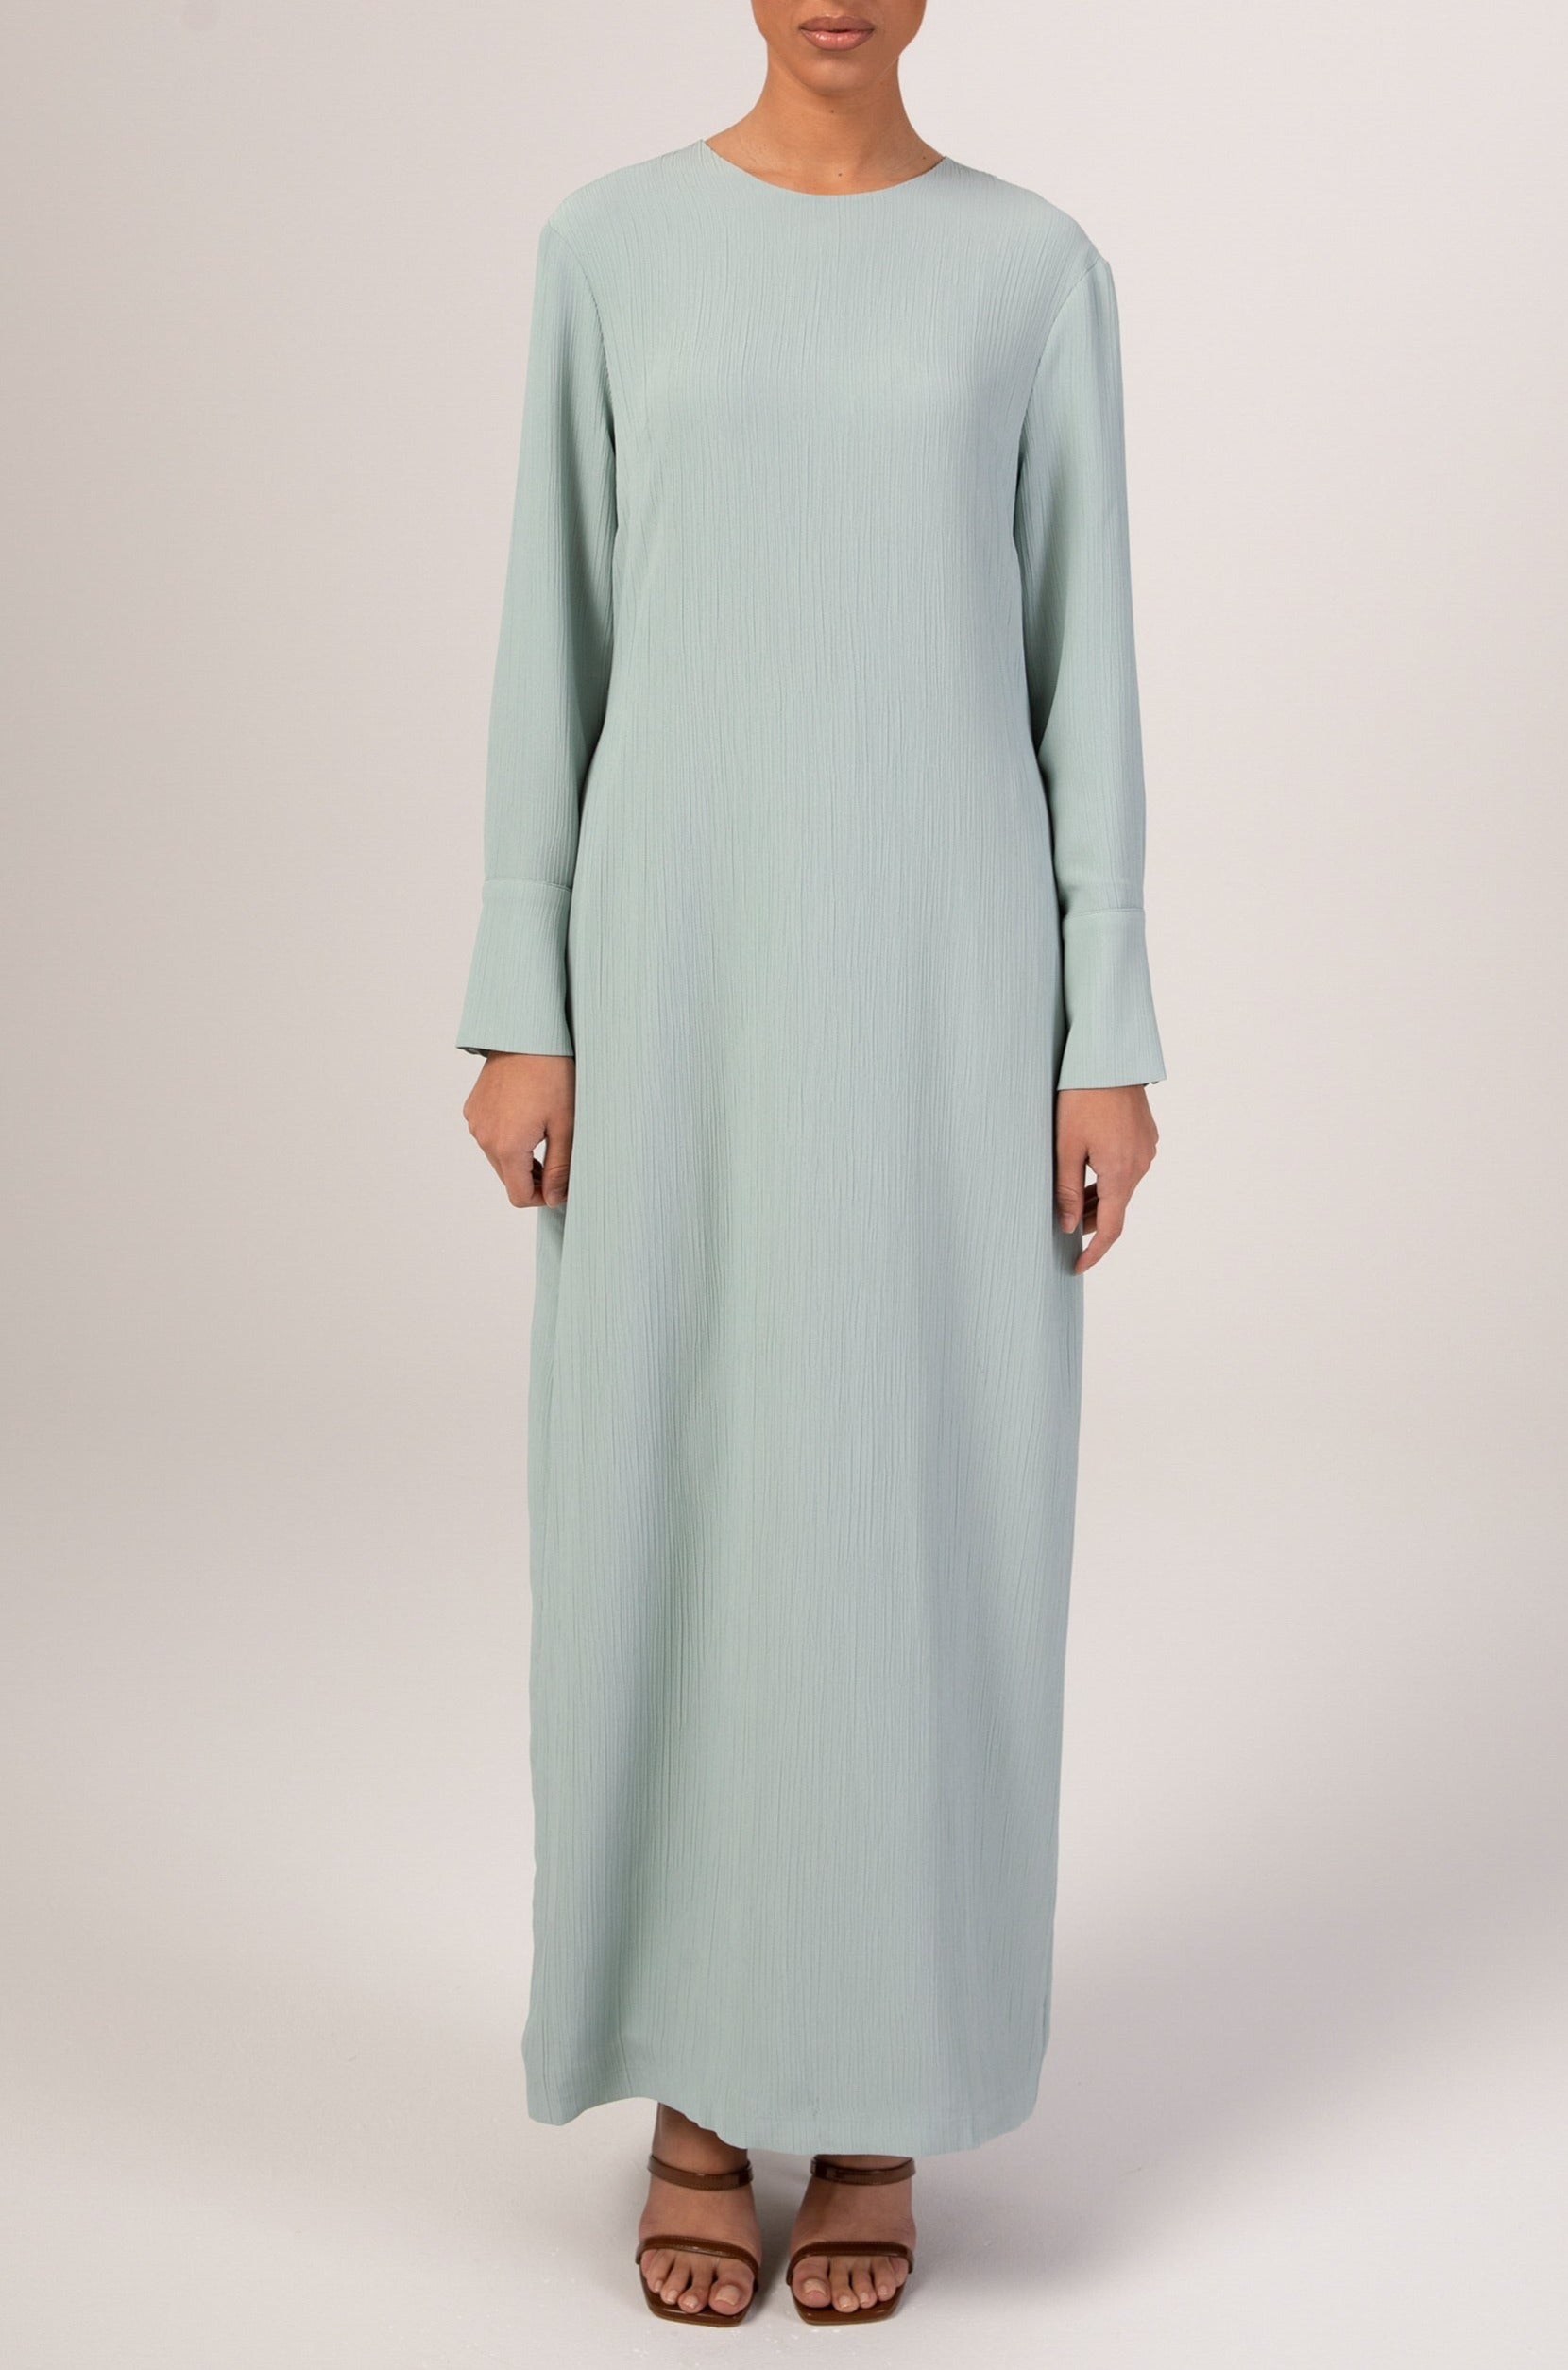 Sajda Textured Maxi Dress - Stillwater Veiled 